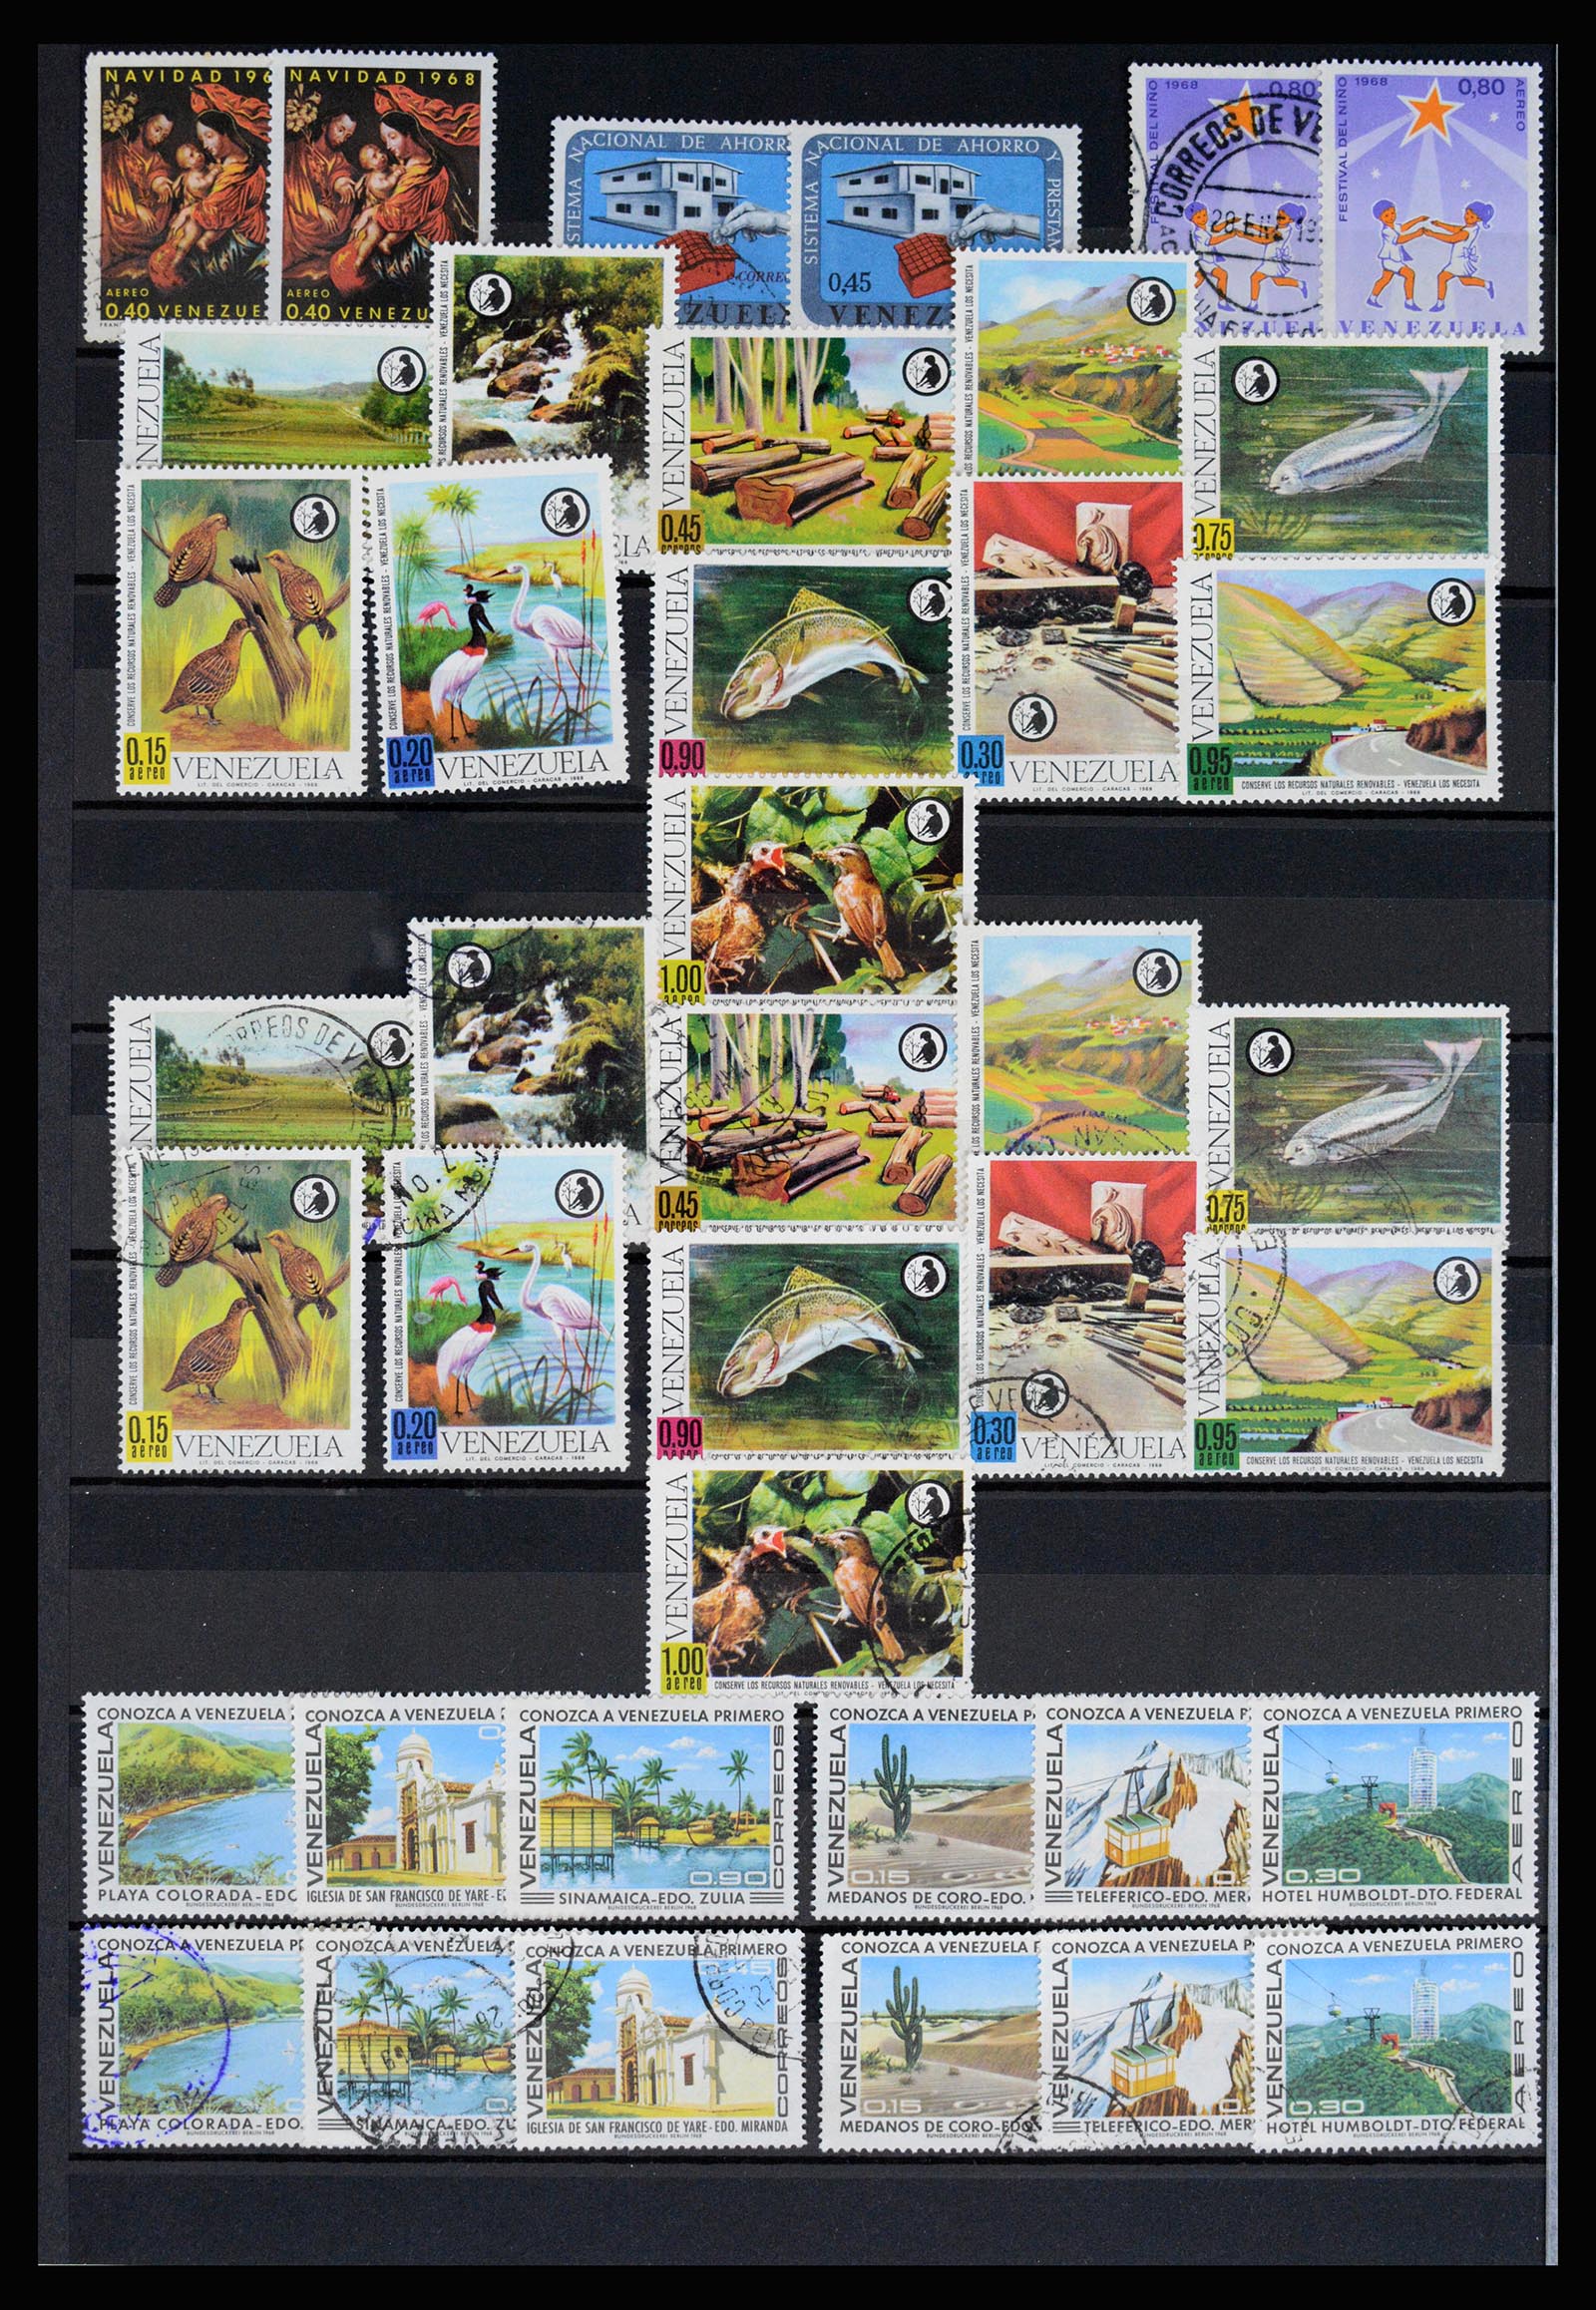 36987 053 - Stamp collection 36987 Venezuela 1860-1995.